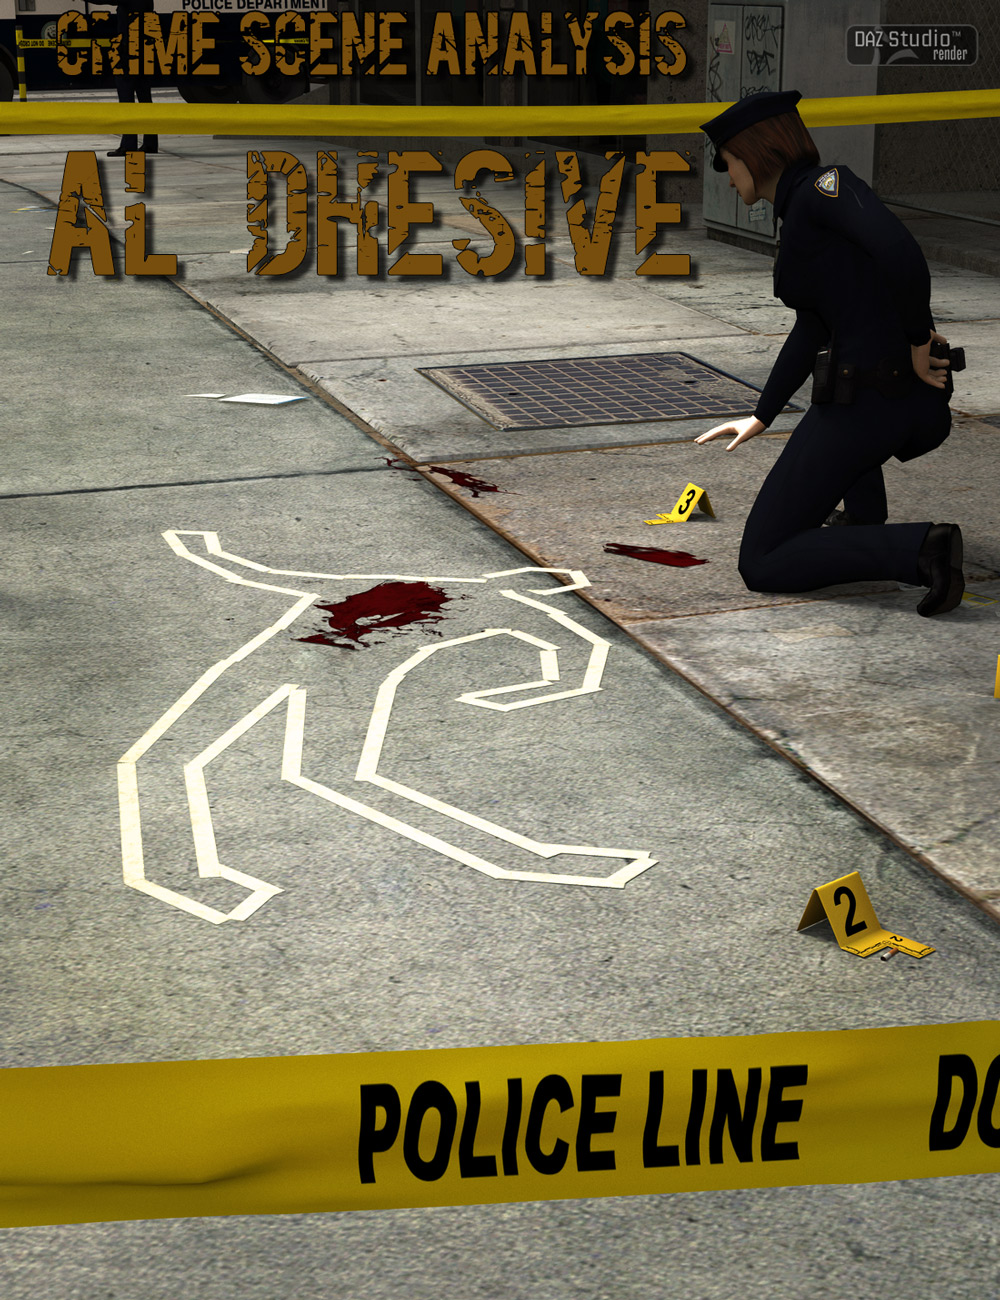 Crime Scene Analysis : Al Dhesive by: V3Digitimes, 3D Models by Daz 3D